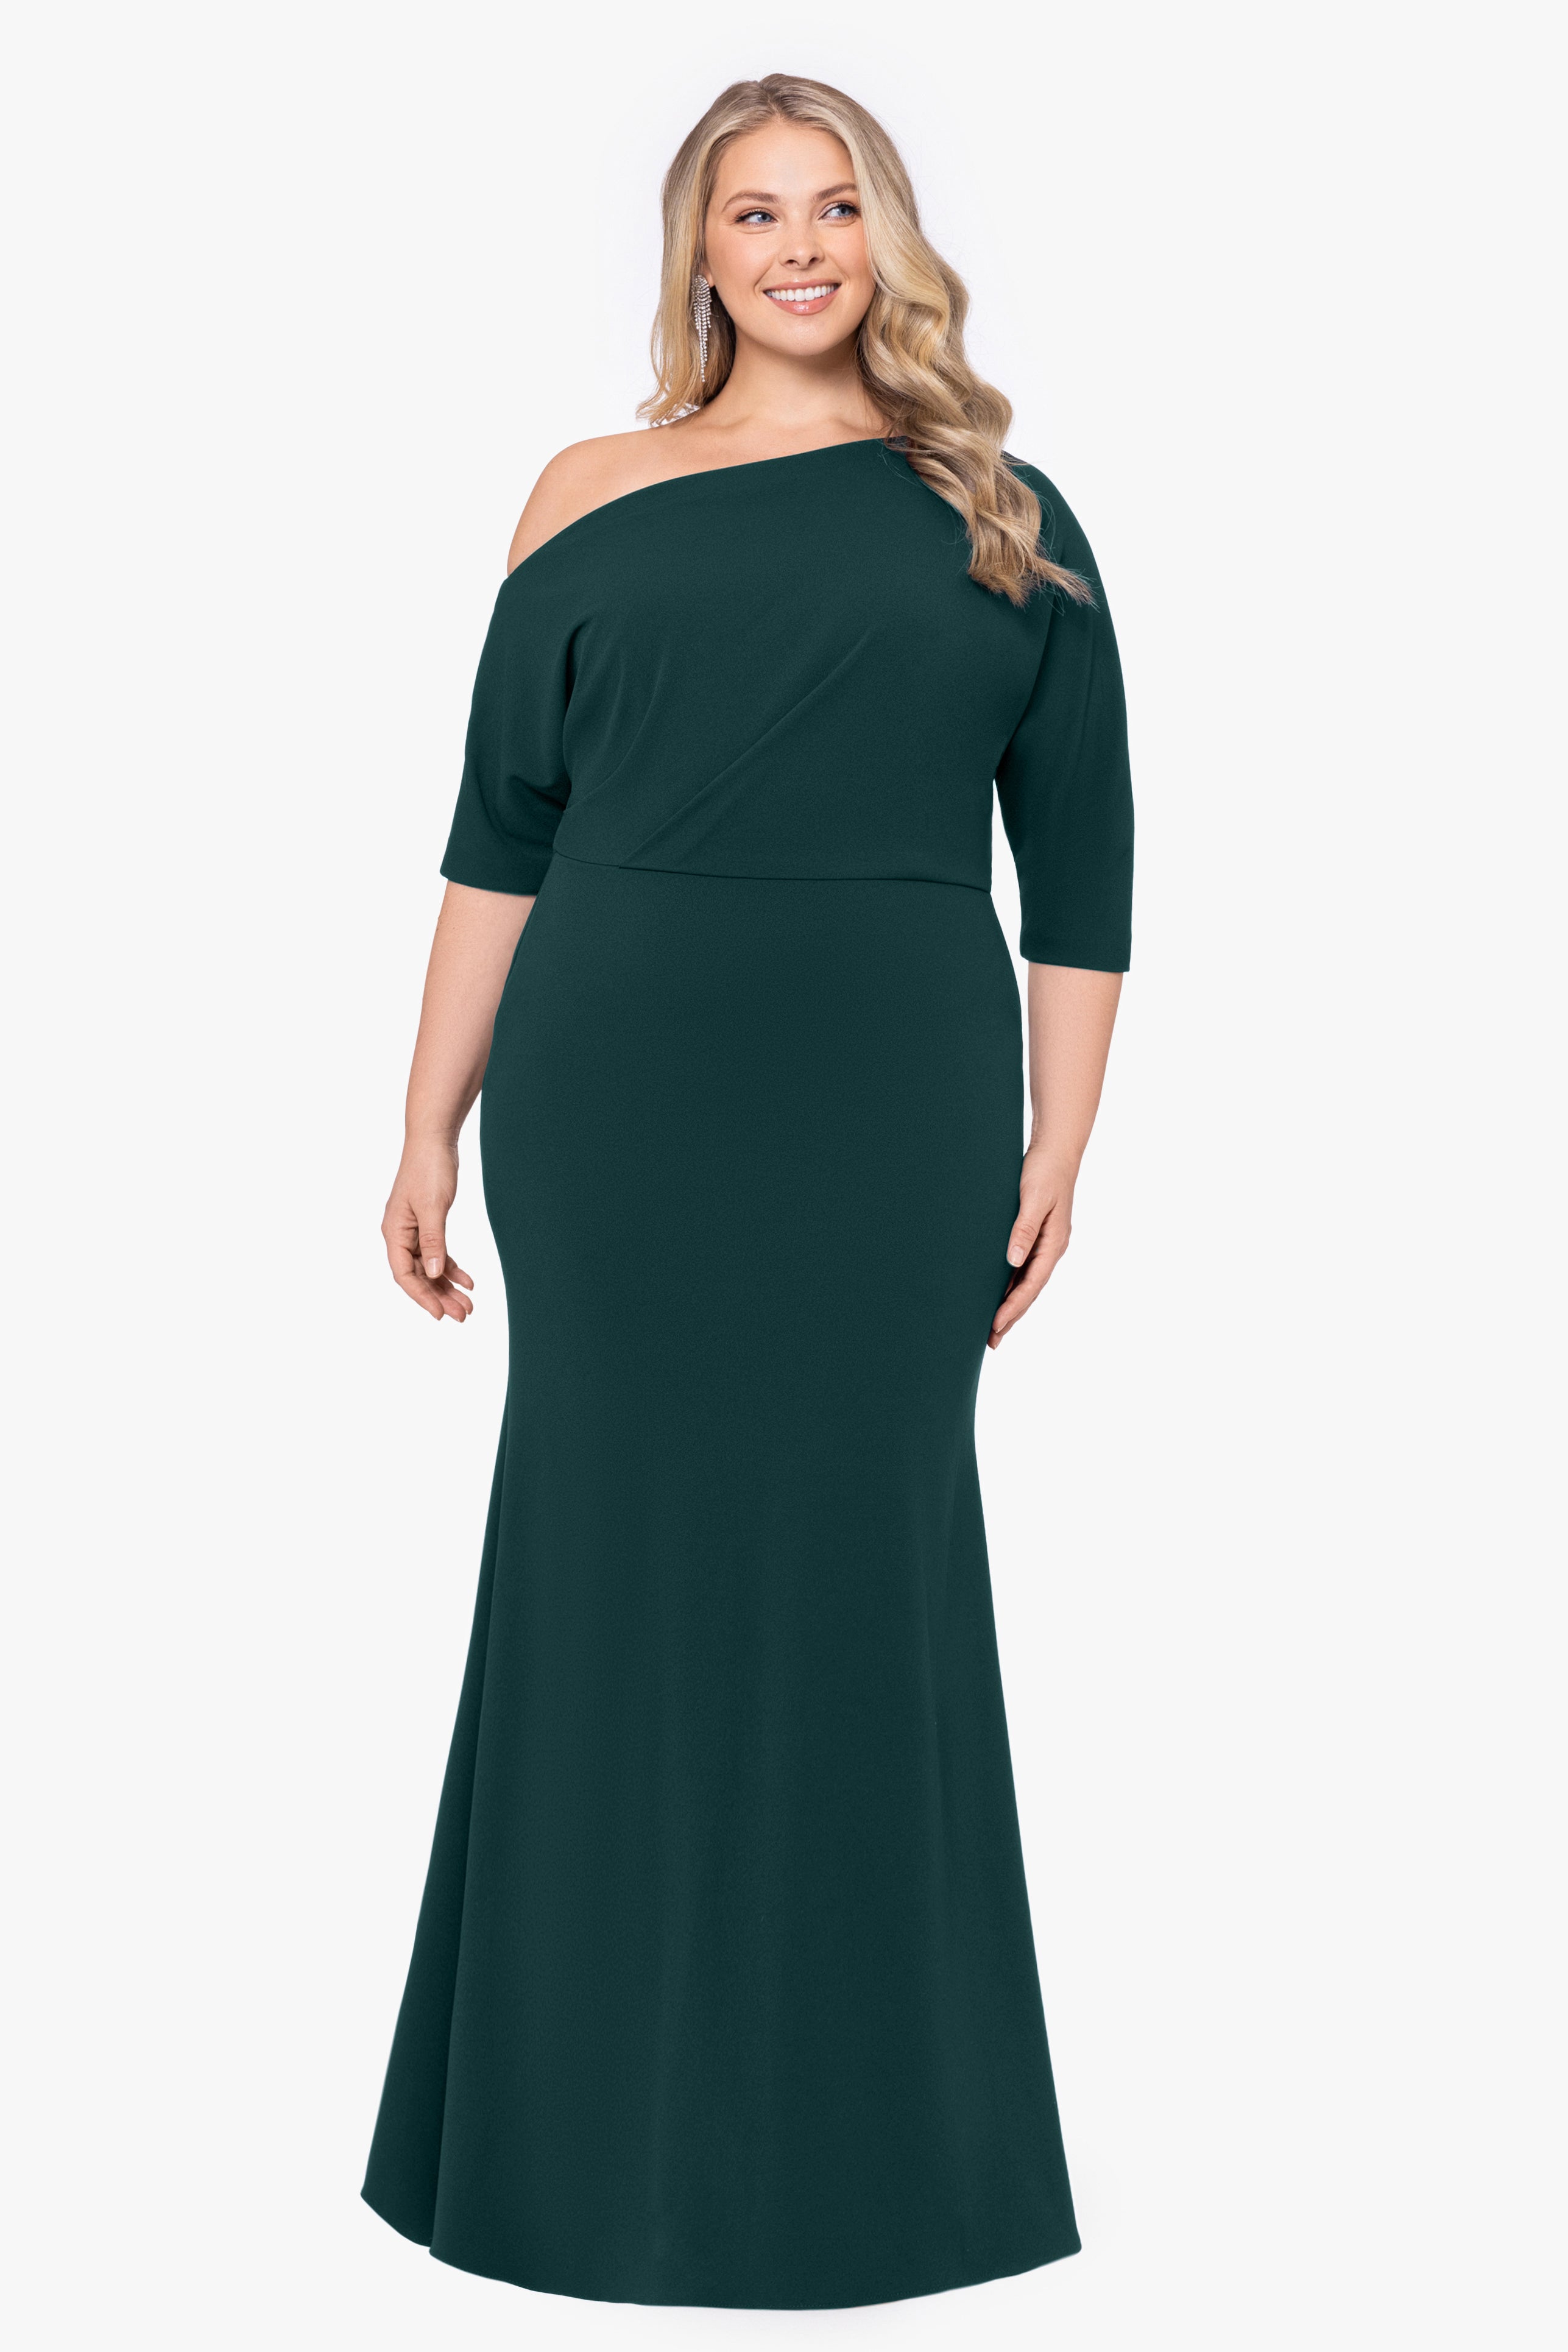 Jeona Bridal | Wedding Dress Size & Style Guide | Sample Dresses